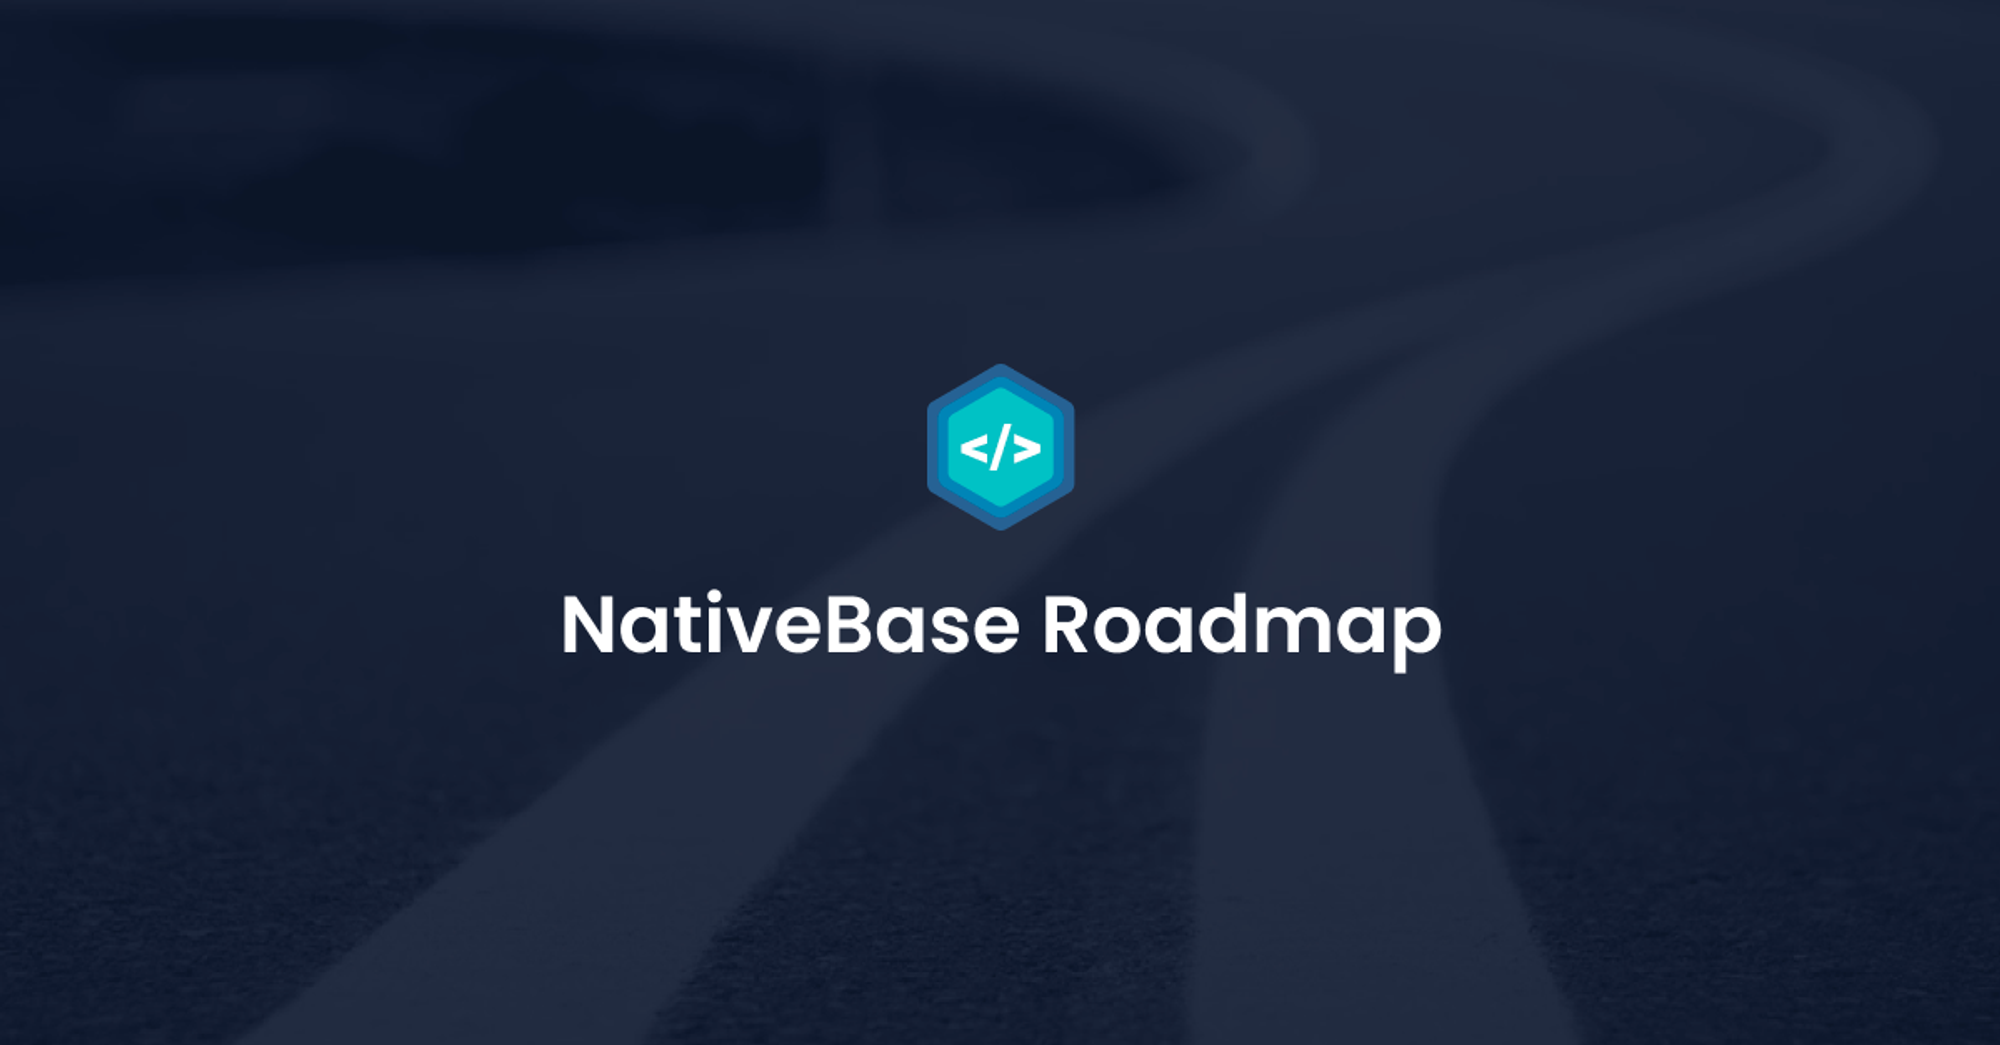 NativeBase Roadmap